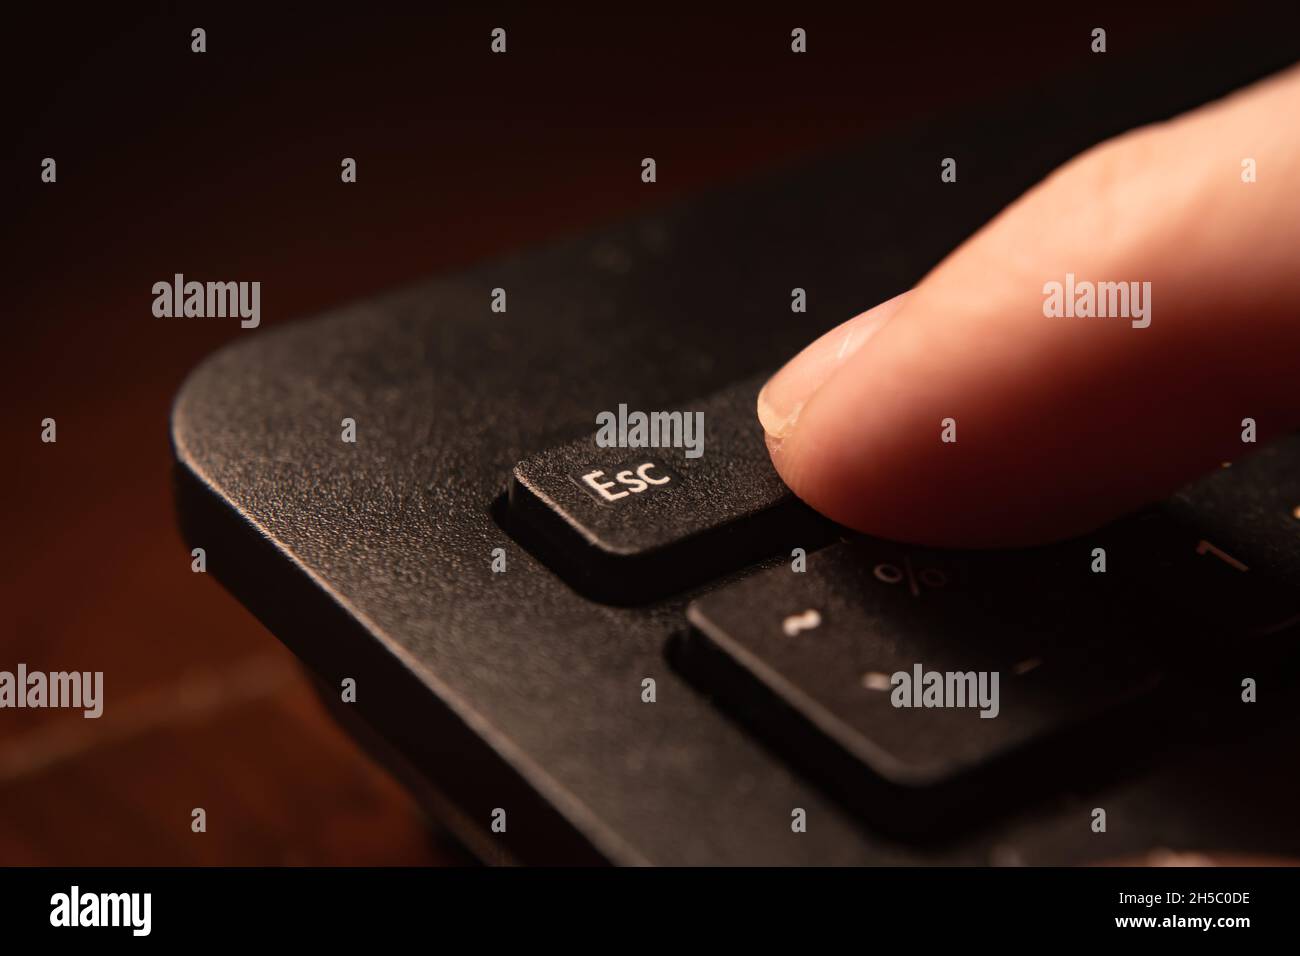 The index finger pressing on the Esc key Stock Photo